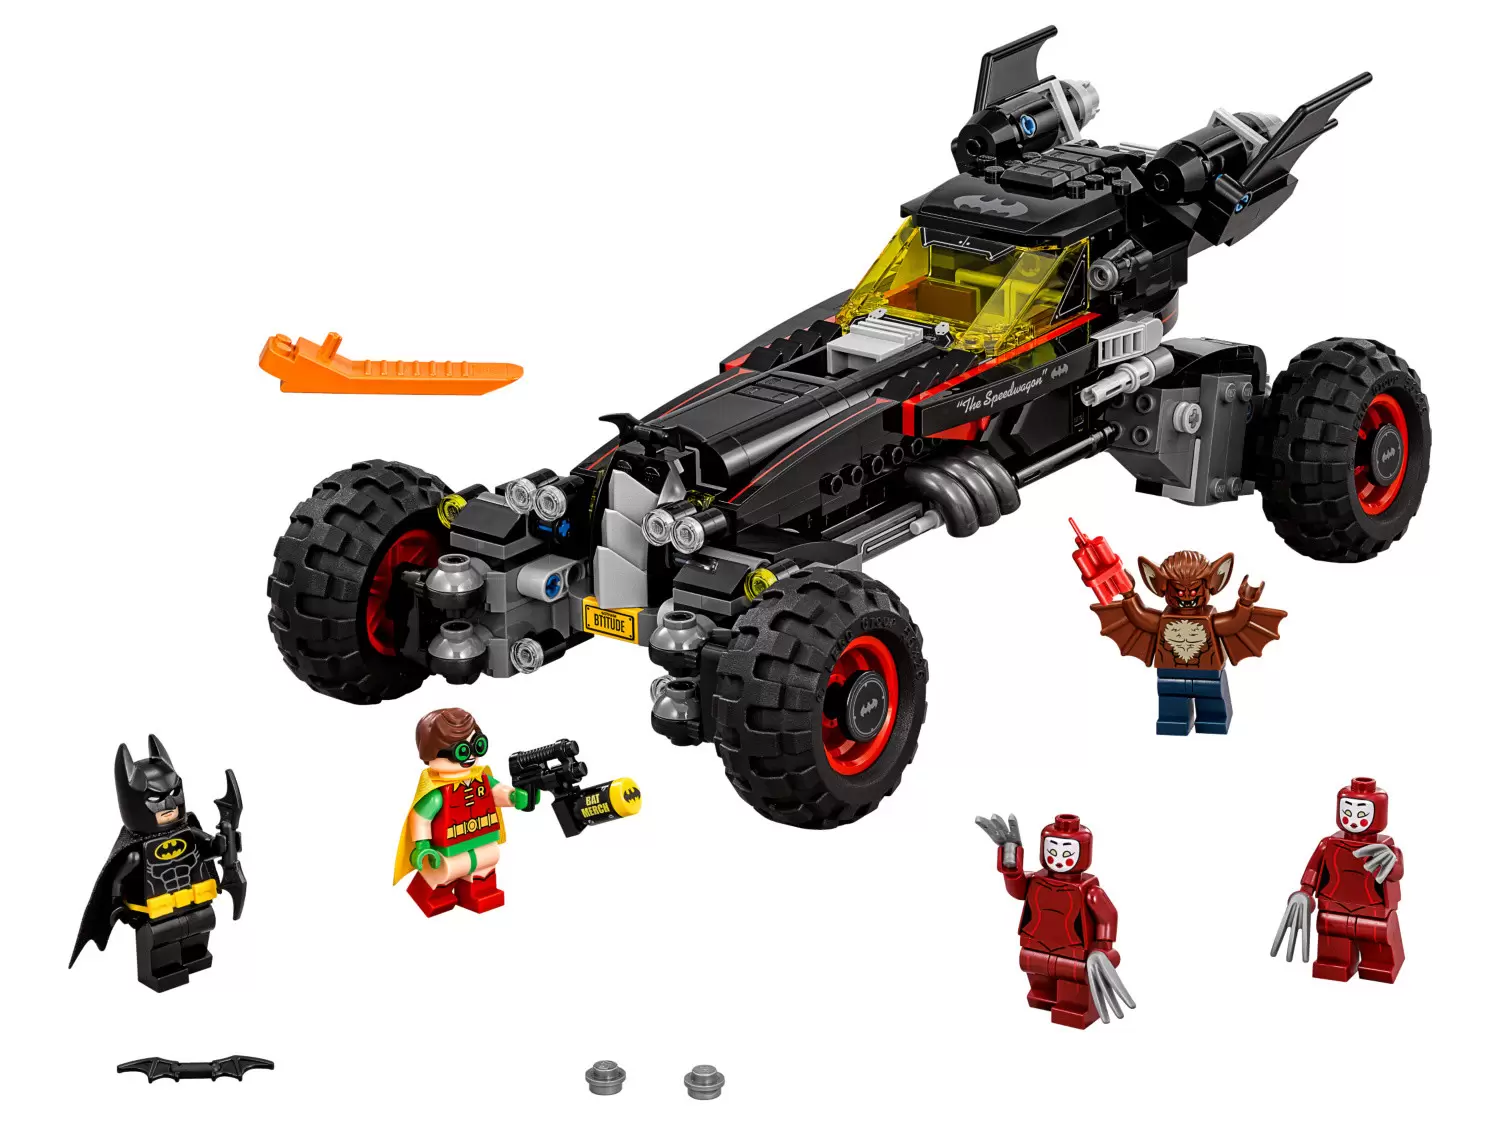 The LEGO Batman Movie - The Batmobile